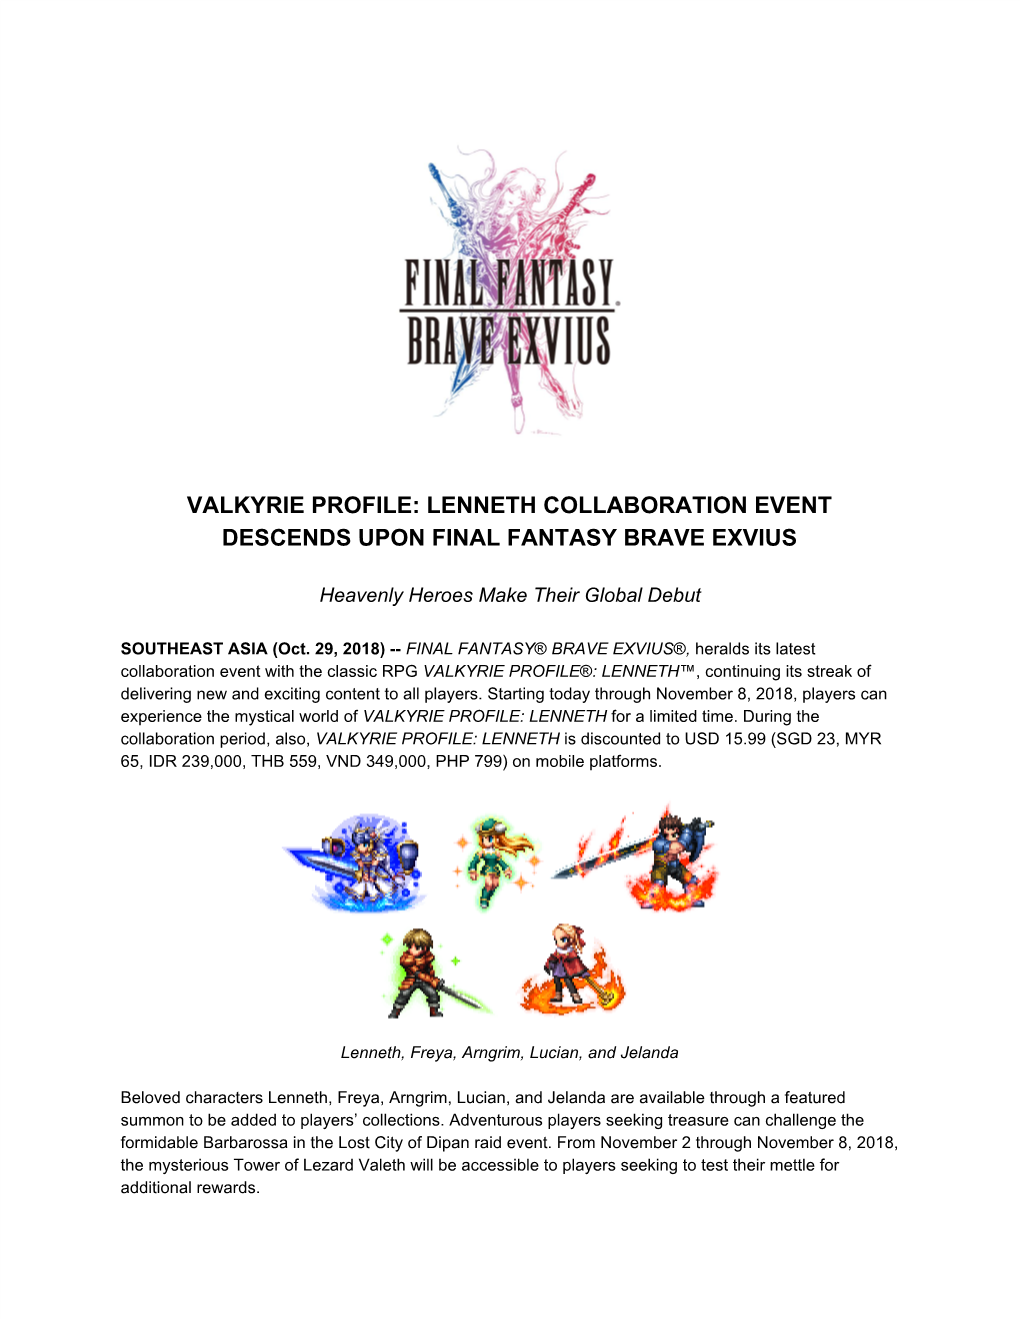 Valkyrie Profile: Lenneth Collaboration Event Descends Upon Final Fantasy Brave Exvius